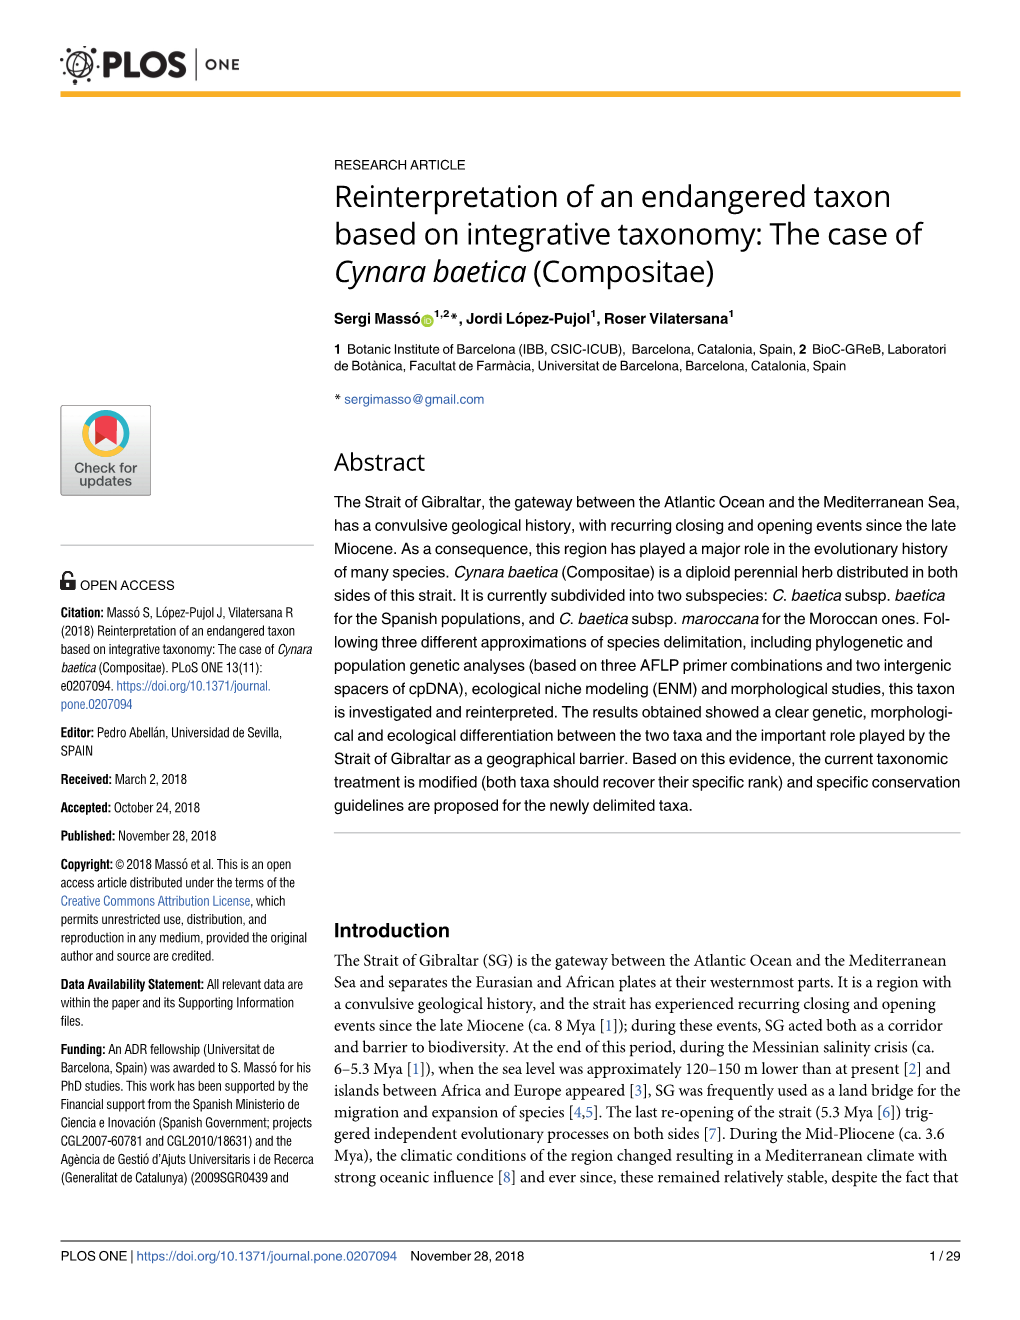 Reinterpretation of an Endangered Taxon Based on Integrative Taxonomy: the Case of Cynara Baetica (Compositae)